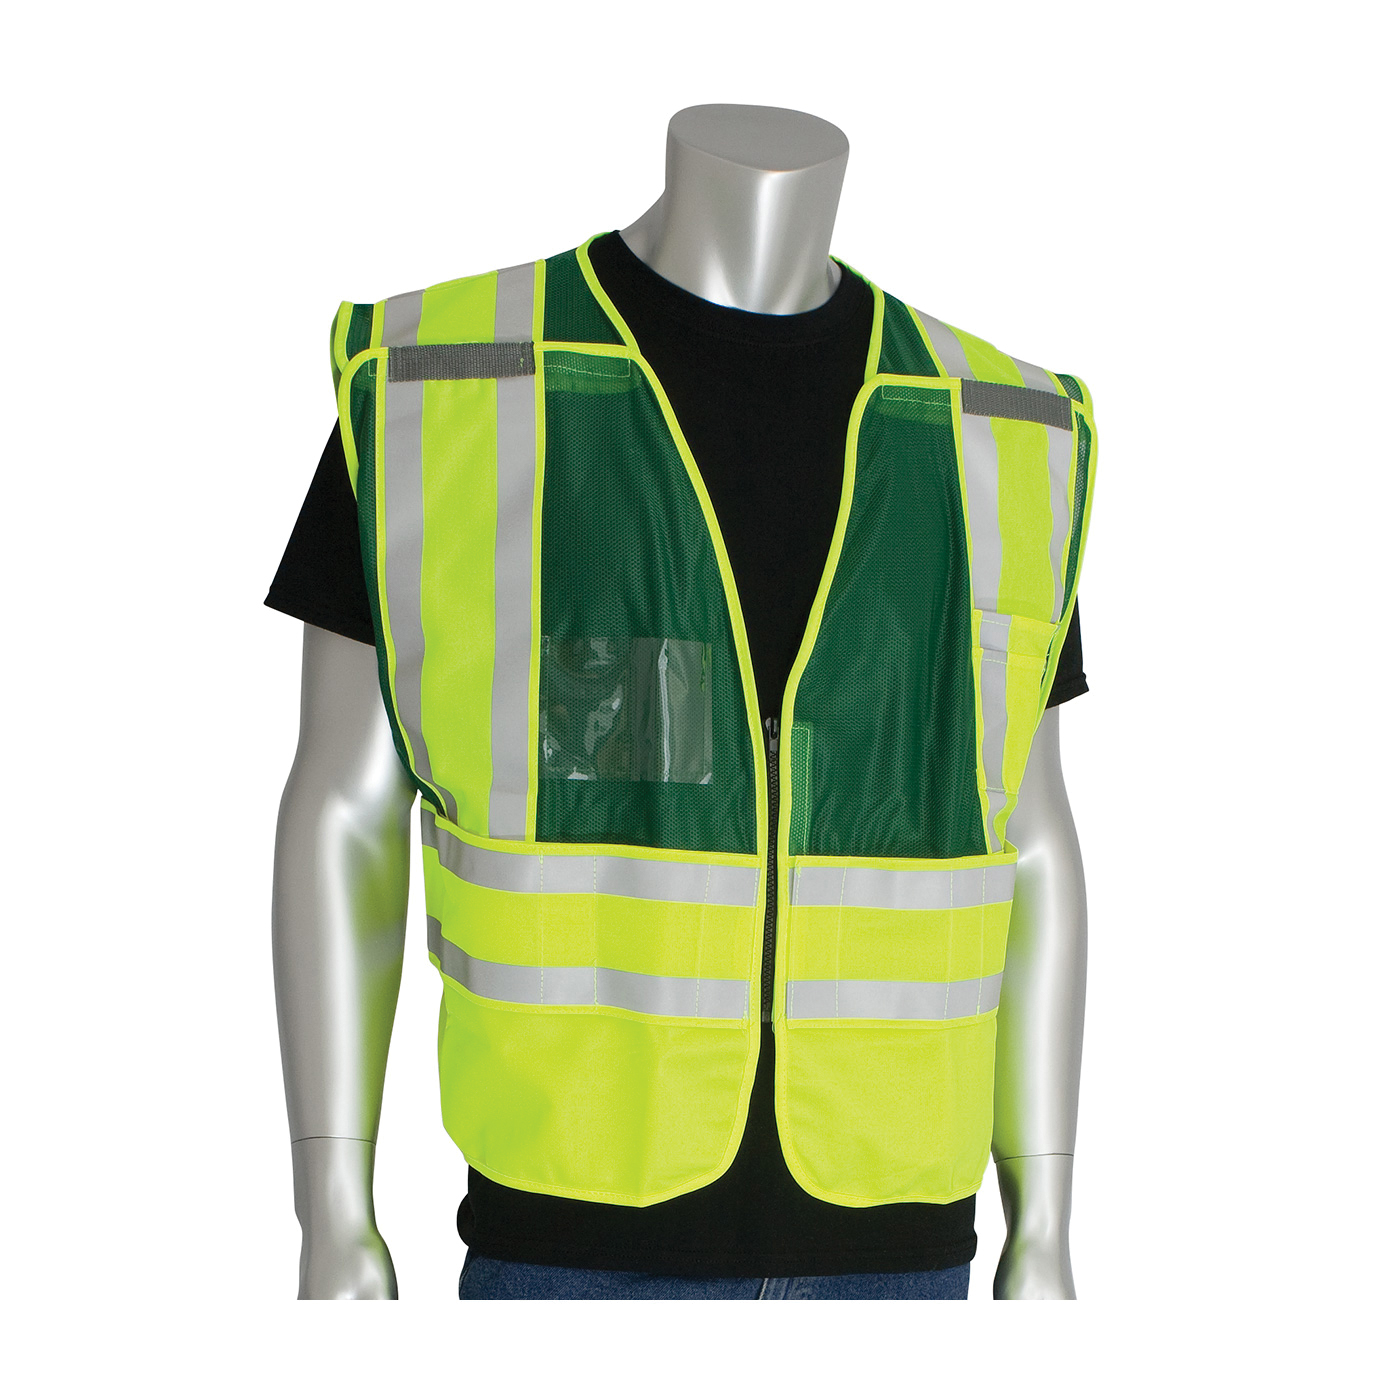 PIP® SafetyGear 302-PSV-GRN-2X/5X Public Safety Vest, 2XL/5XL, Green/Hi-Viz Lime Yellow, Polyester, Front Zipper Closure, 2 Pockets, ANSI Class: Class 2, ANSI/ISEA 207